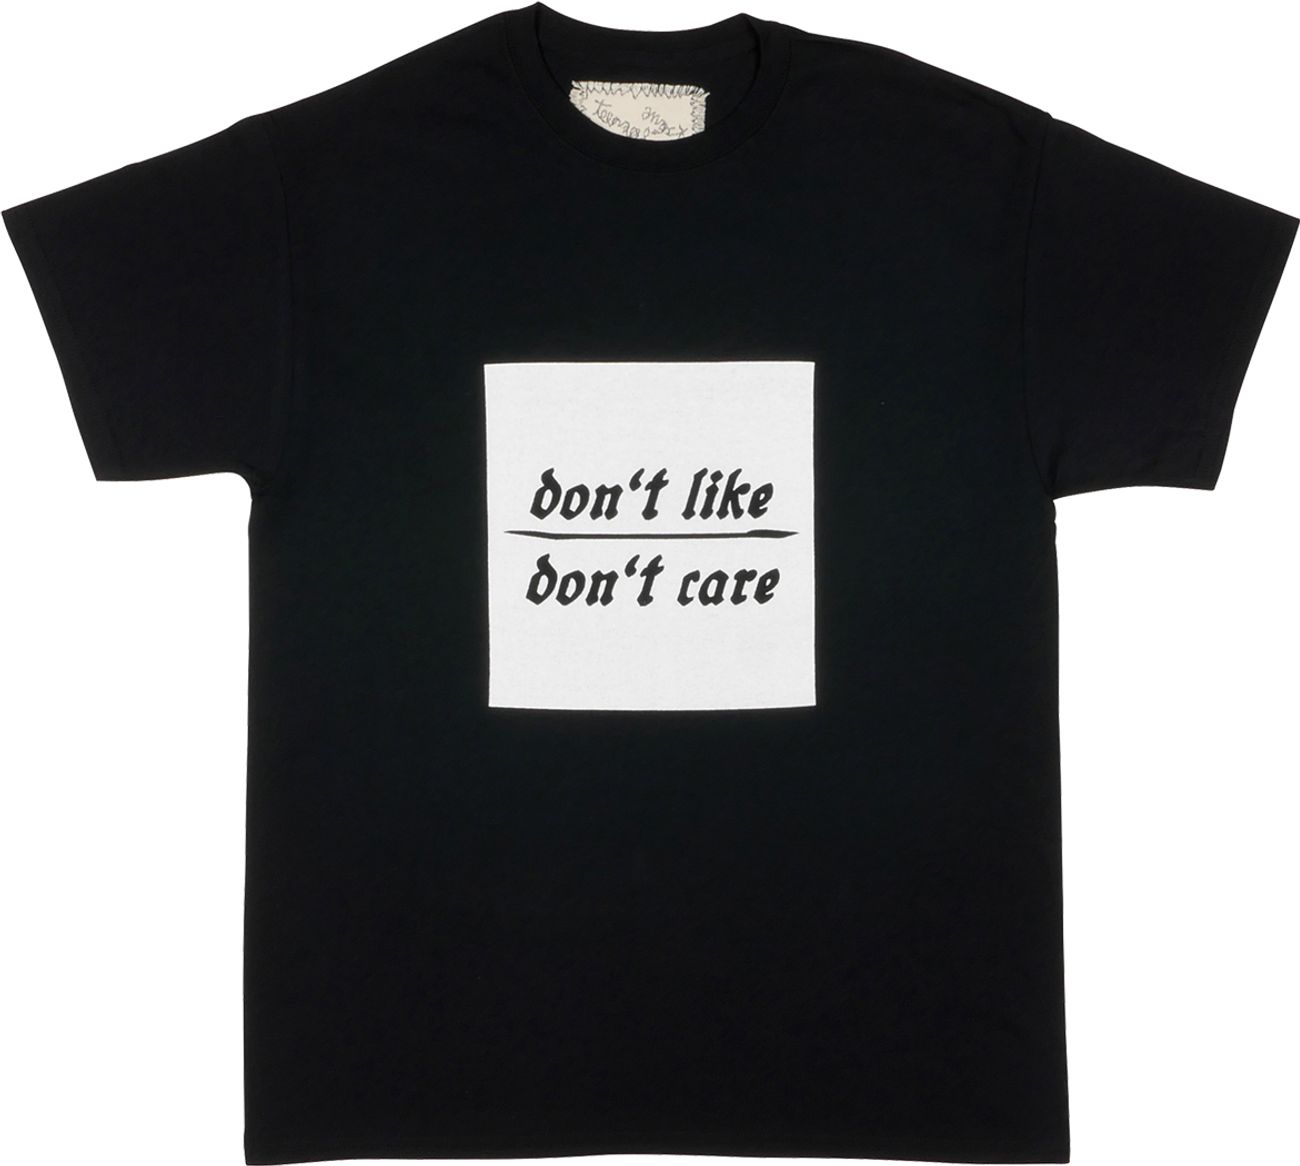 Teenage Angst "Don't like, don't care" T-Shirt - B/W